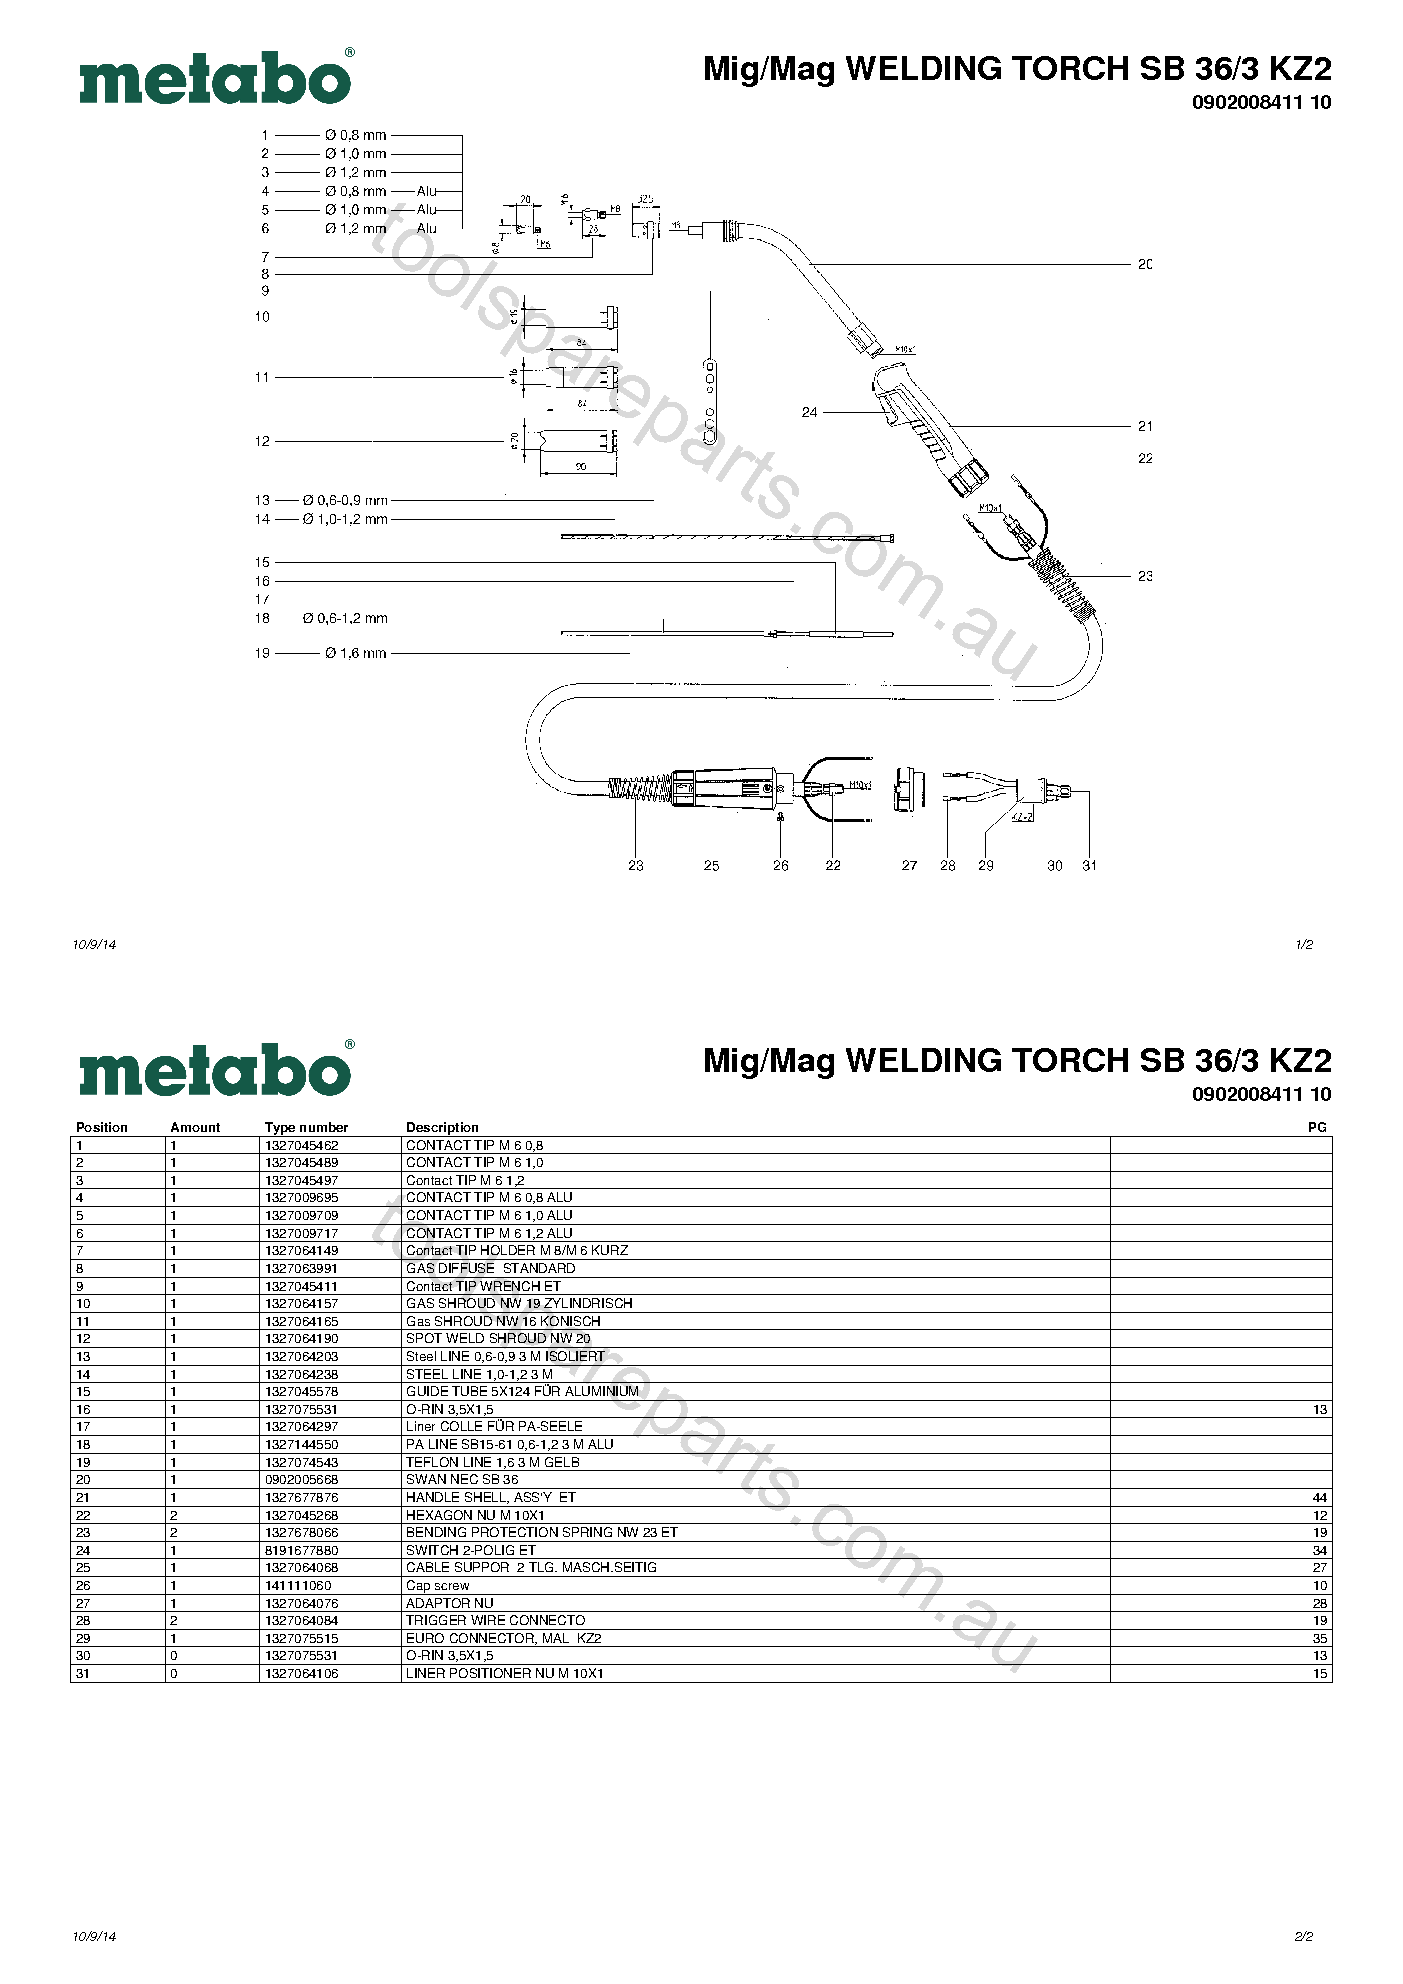 Metabo Mig/Mag WELDING TORCH SB 36/3 KZ2 0902008411 10  Diagram 1